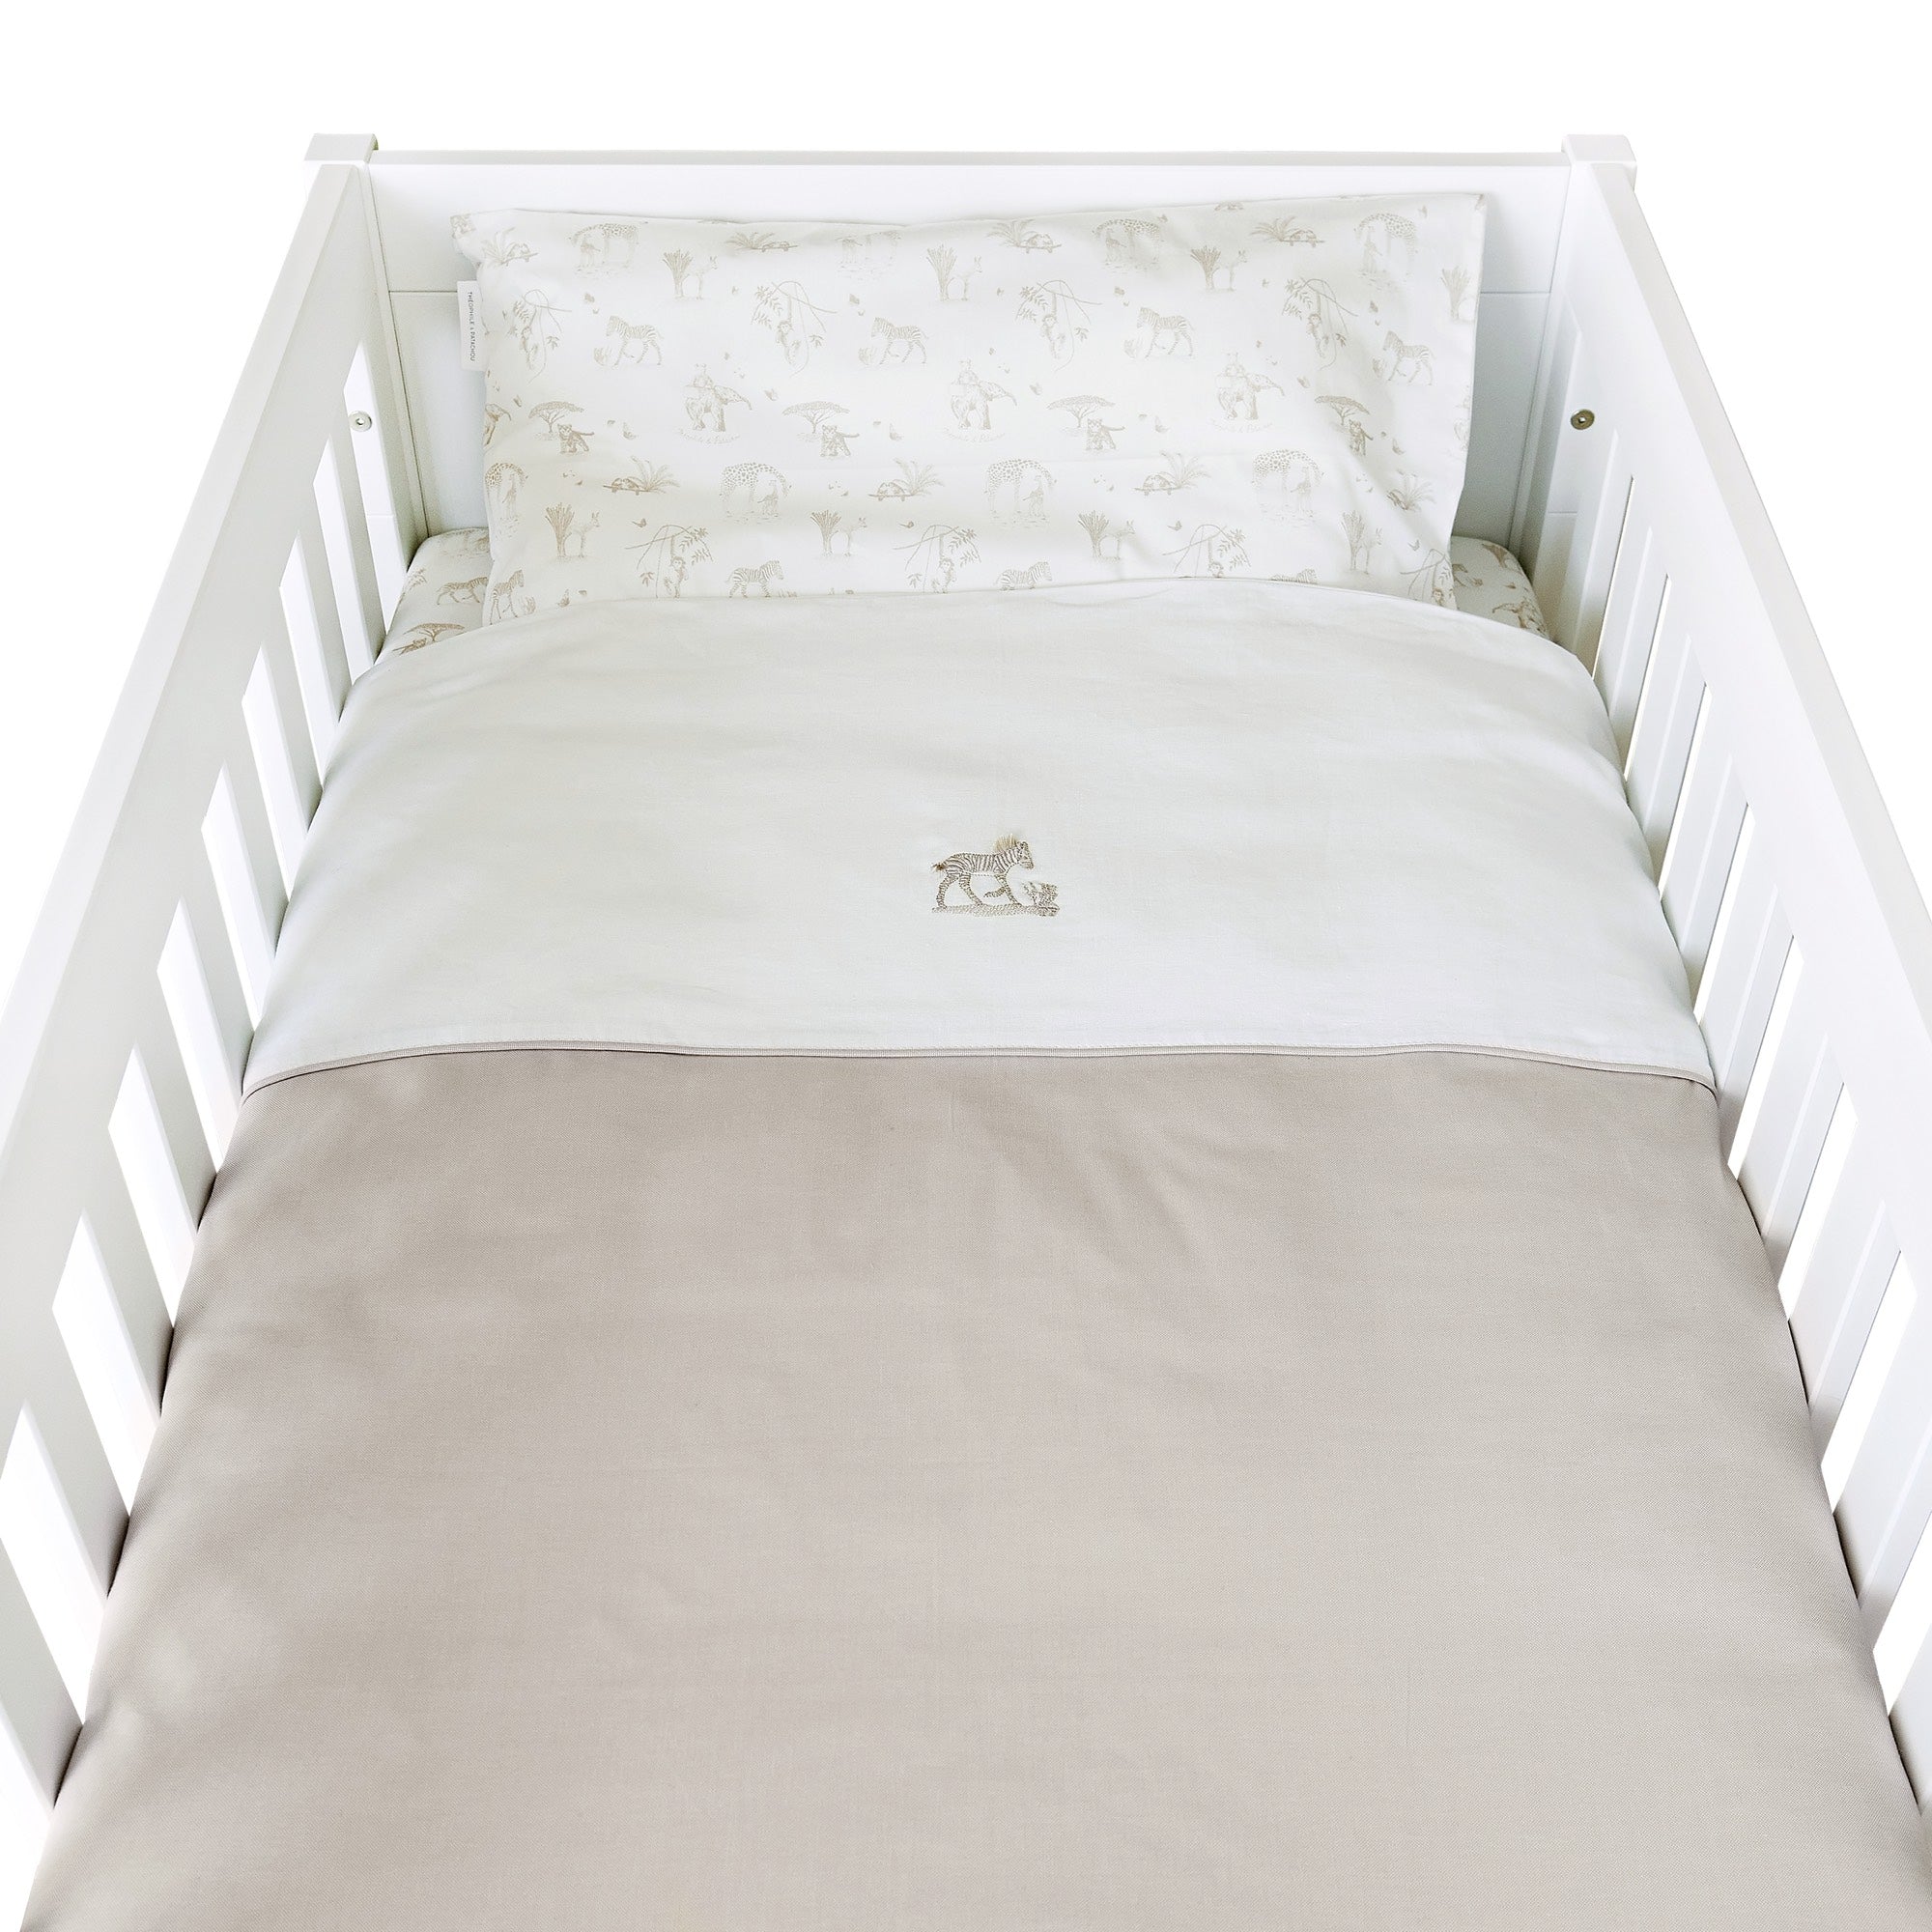 Theophile & Patachou Baby Cot Bed Duvet Cover - Safari